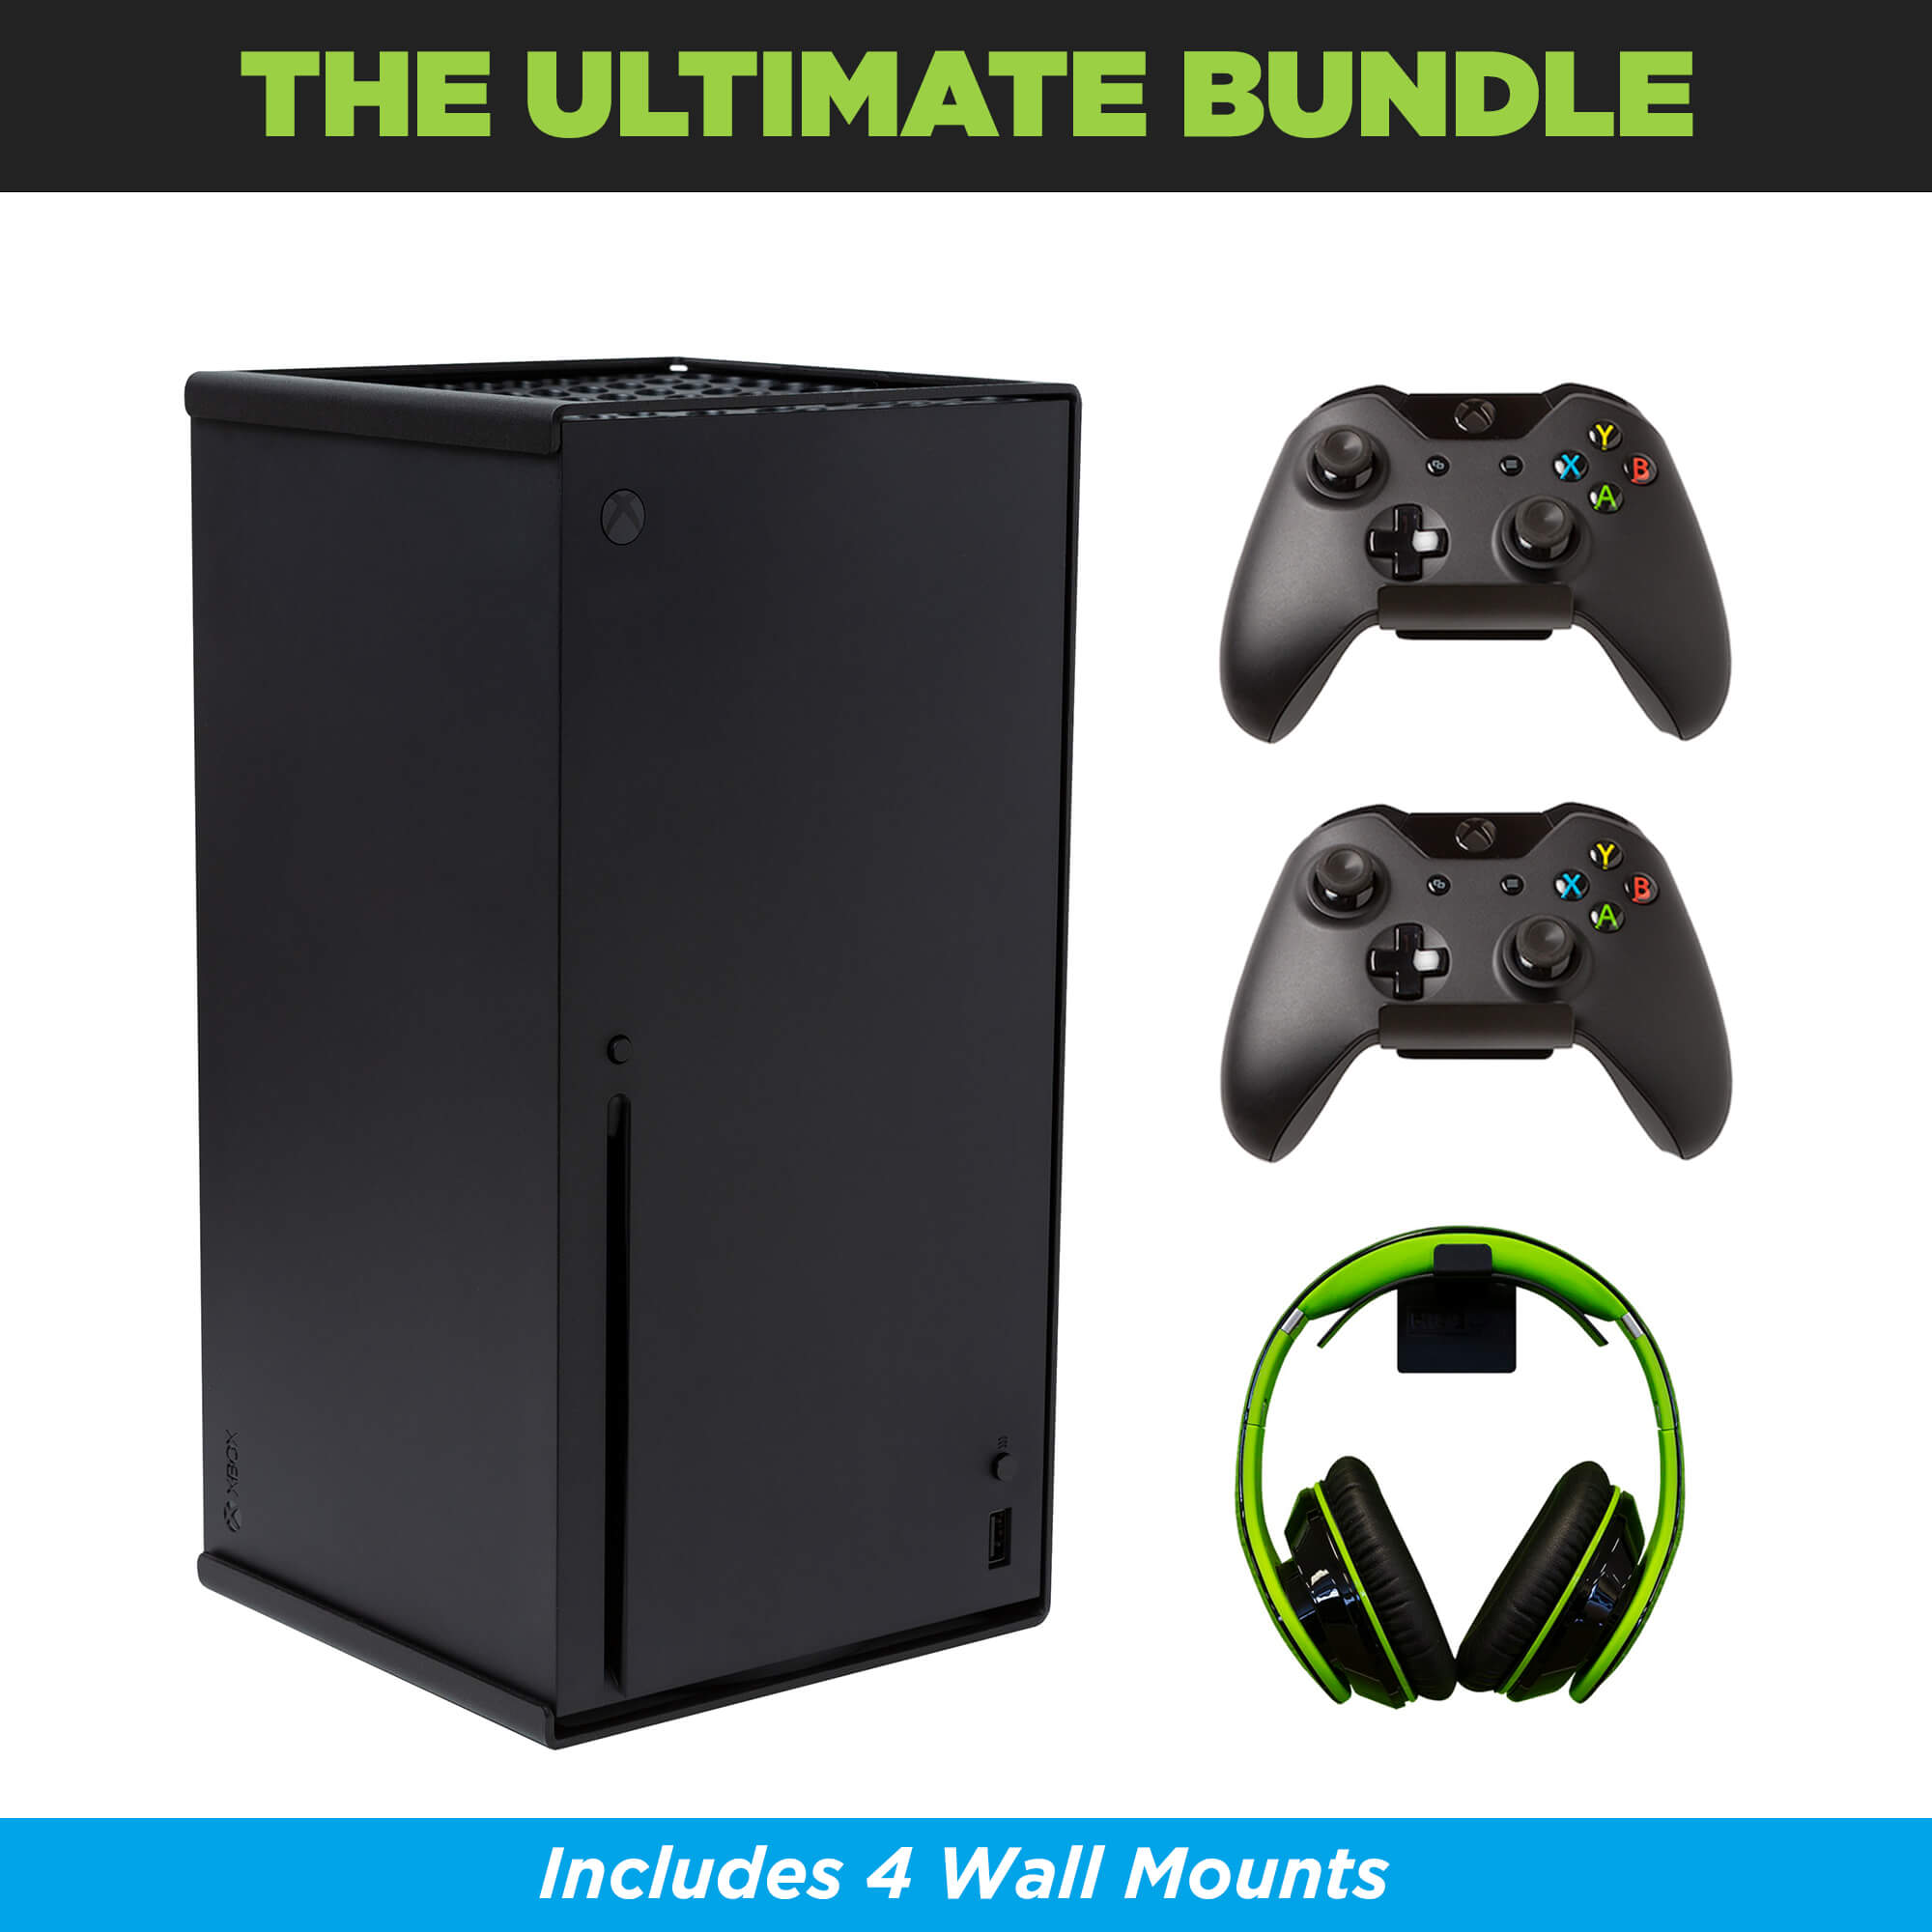 Xbox Series X price, bundles, and deals